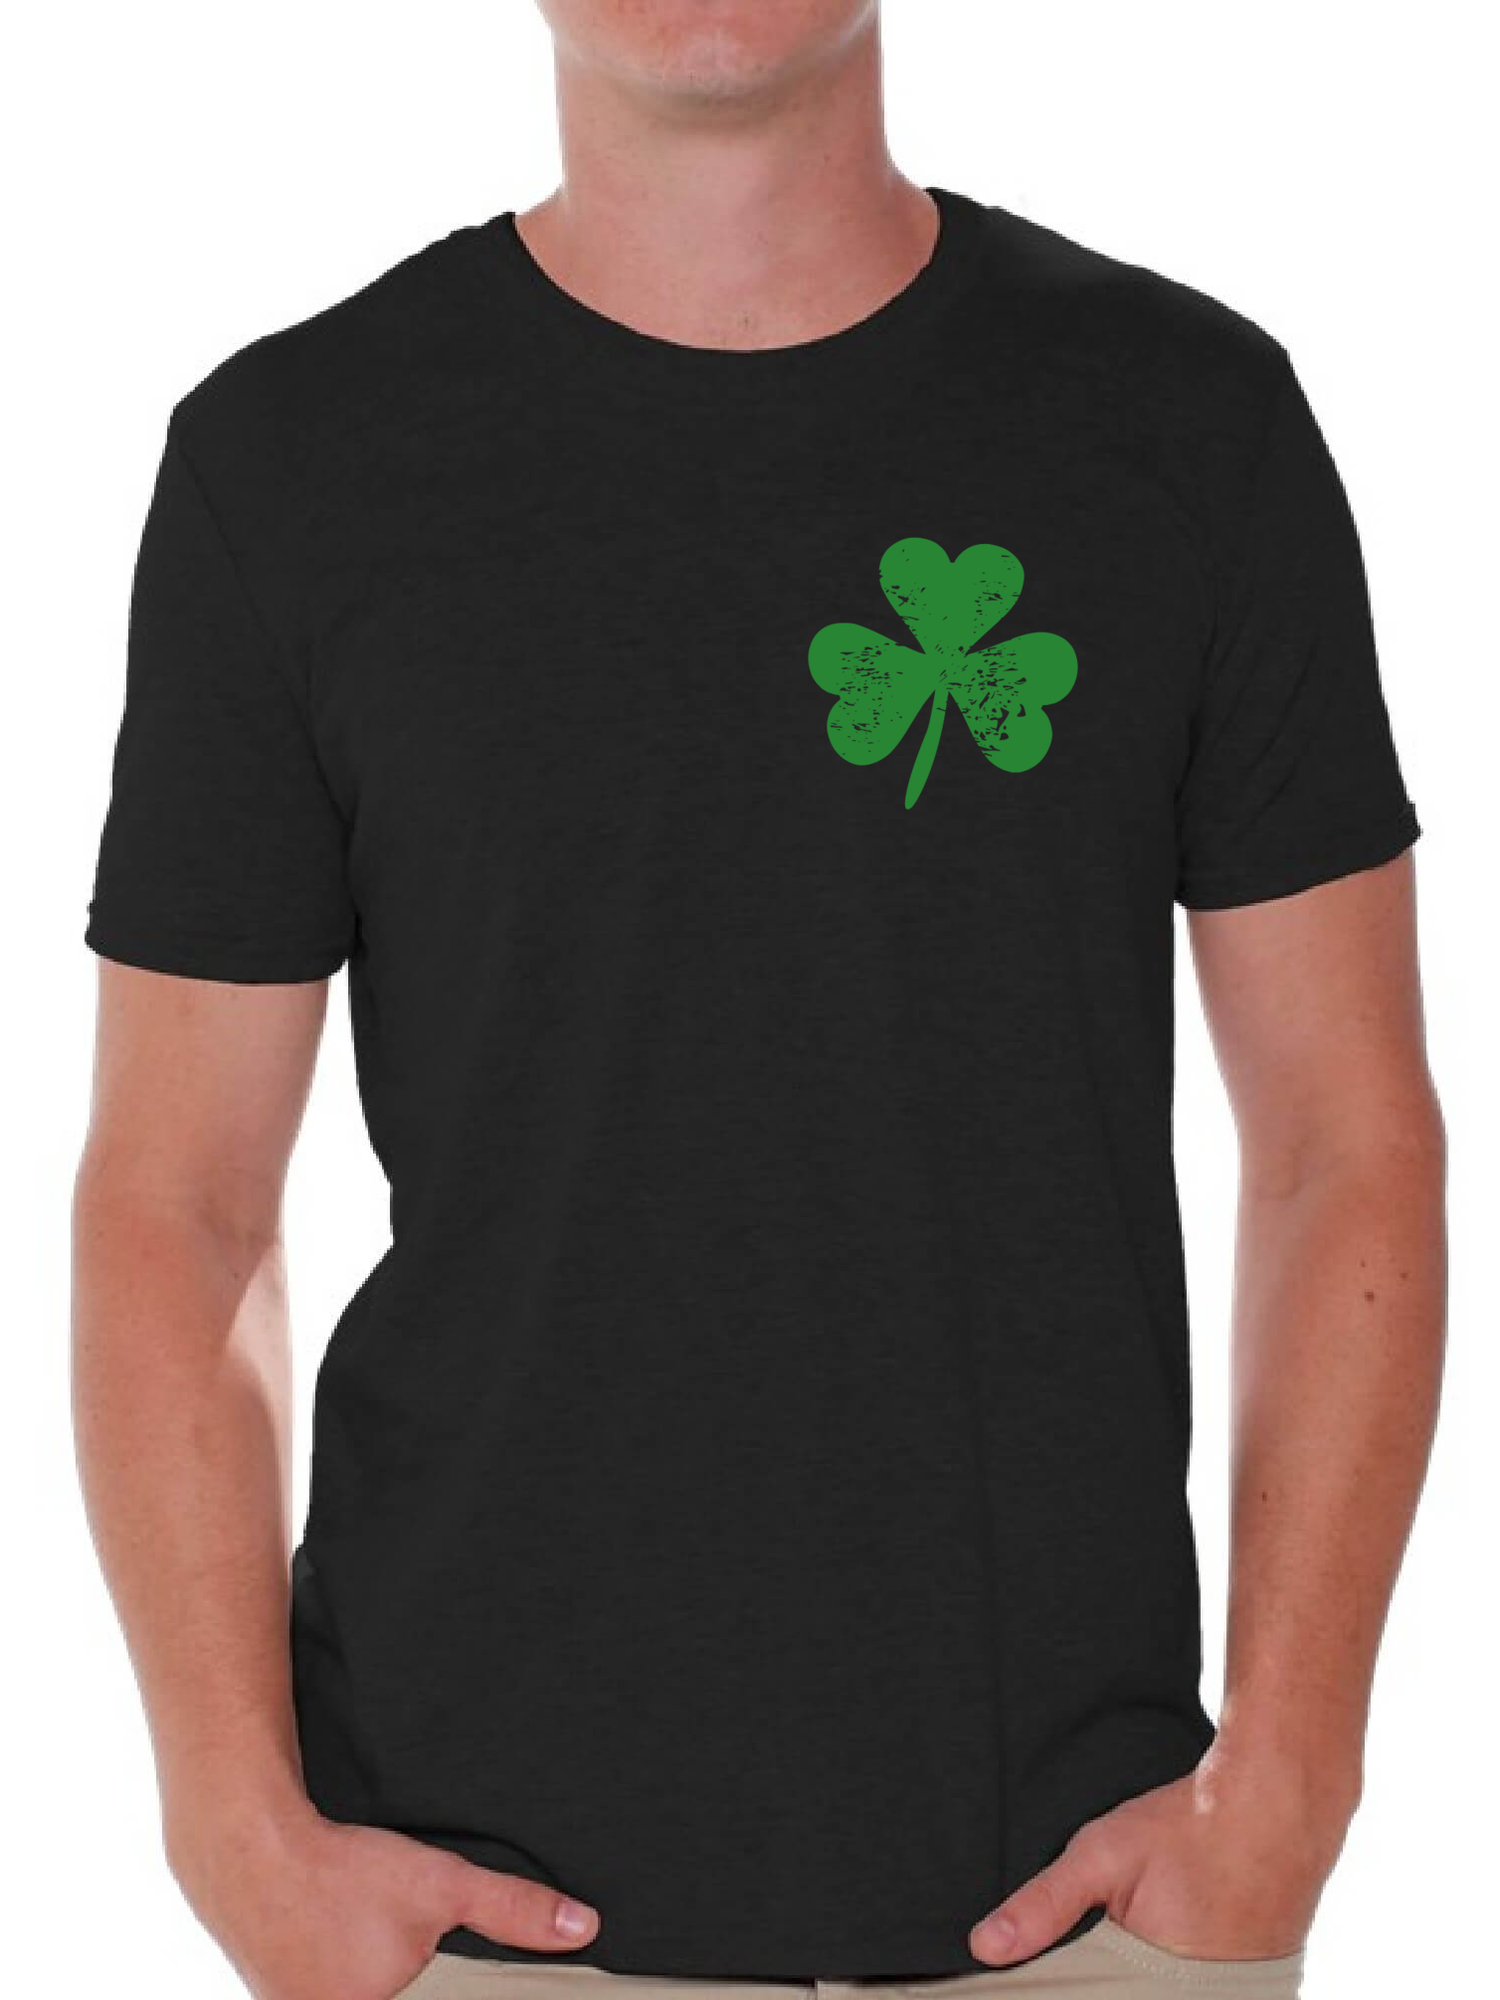 Awkward Styles St Patrick Shirts Irish Clover Pocket Shirt St. Patricks Day T Shirt for Men Lucky Shamrock Shirt Irish Gifts for Him Irish Pride Shirt St Paddy's Day Pocket Shamrock Distressed Shirt - image 1 of 6